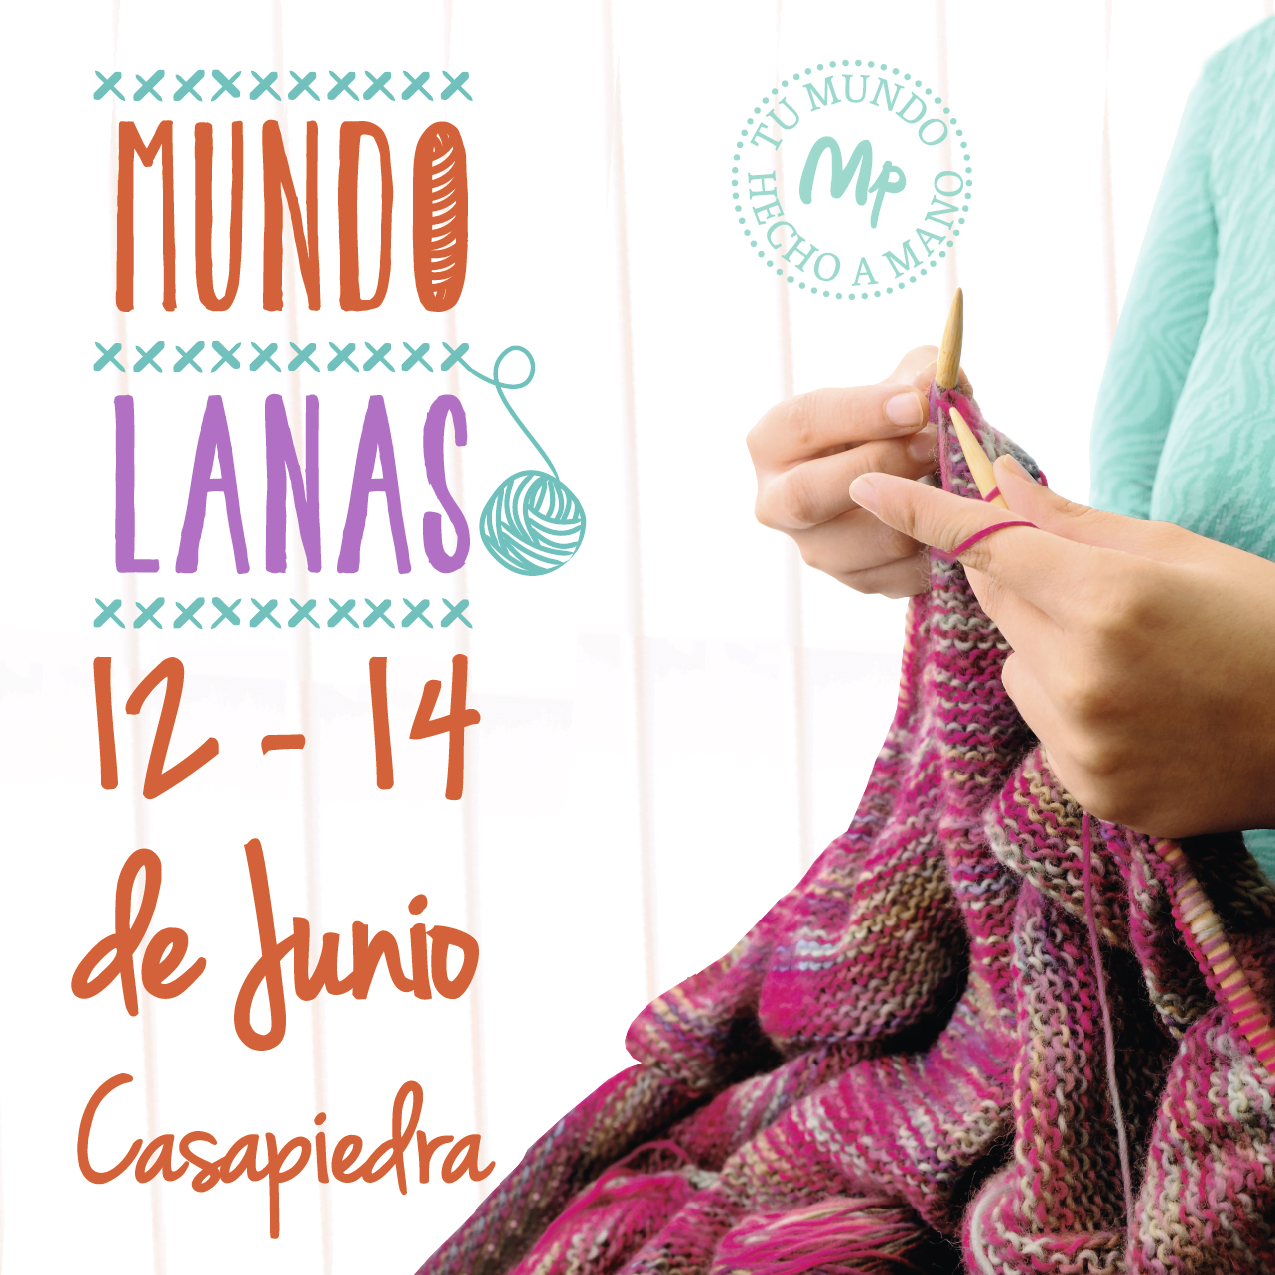 You are currently viewing Panorama: Mundo Lanas en CasaPiedra @tumateriaprima